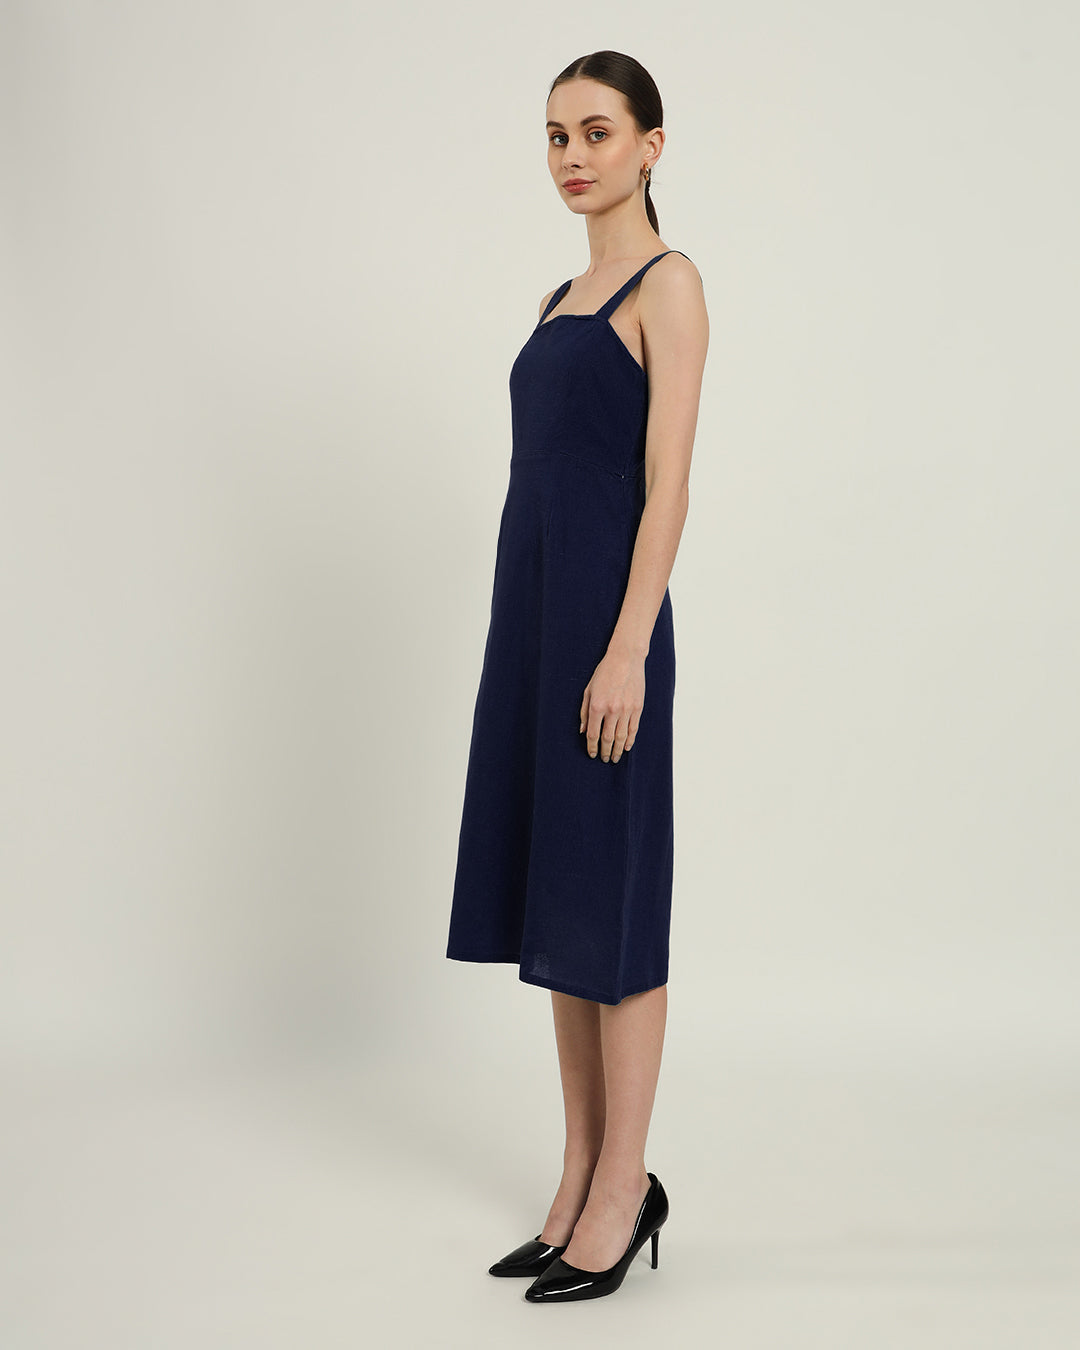 The Samara Daisy Midnight Blue Linen Dress